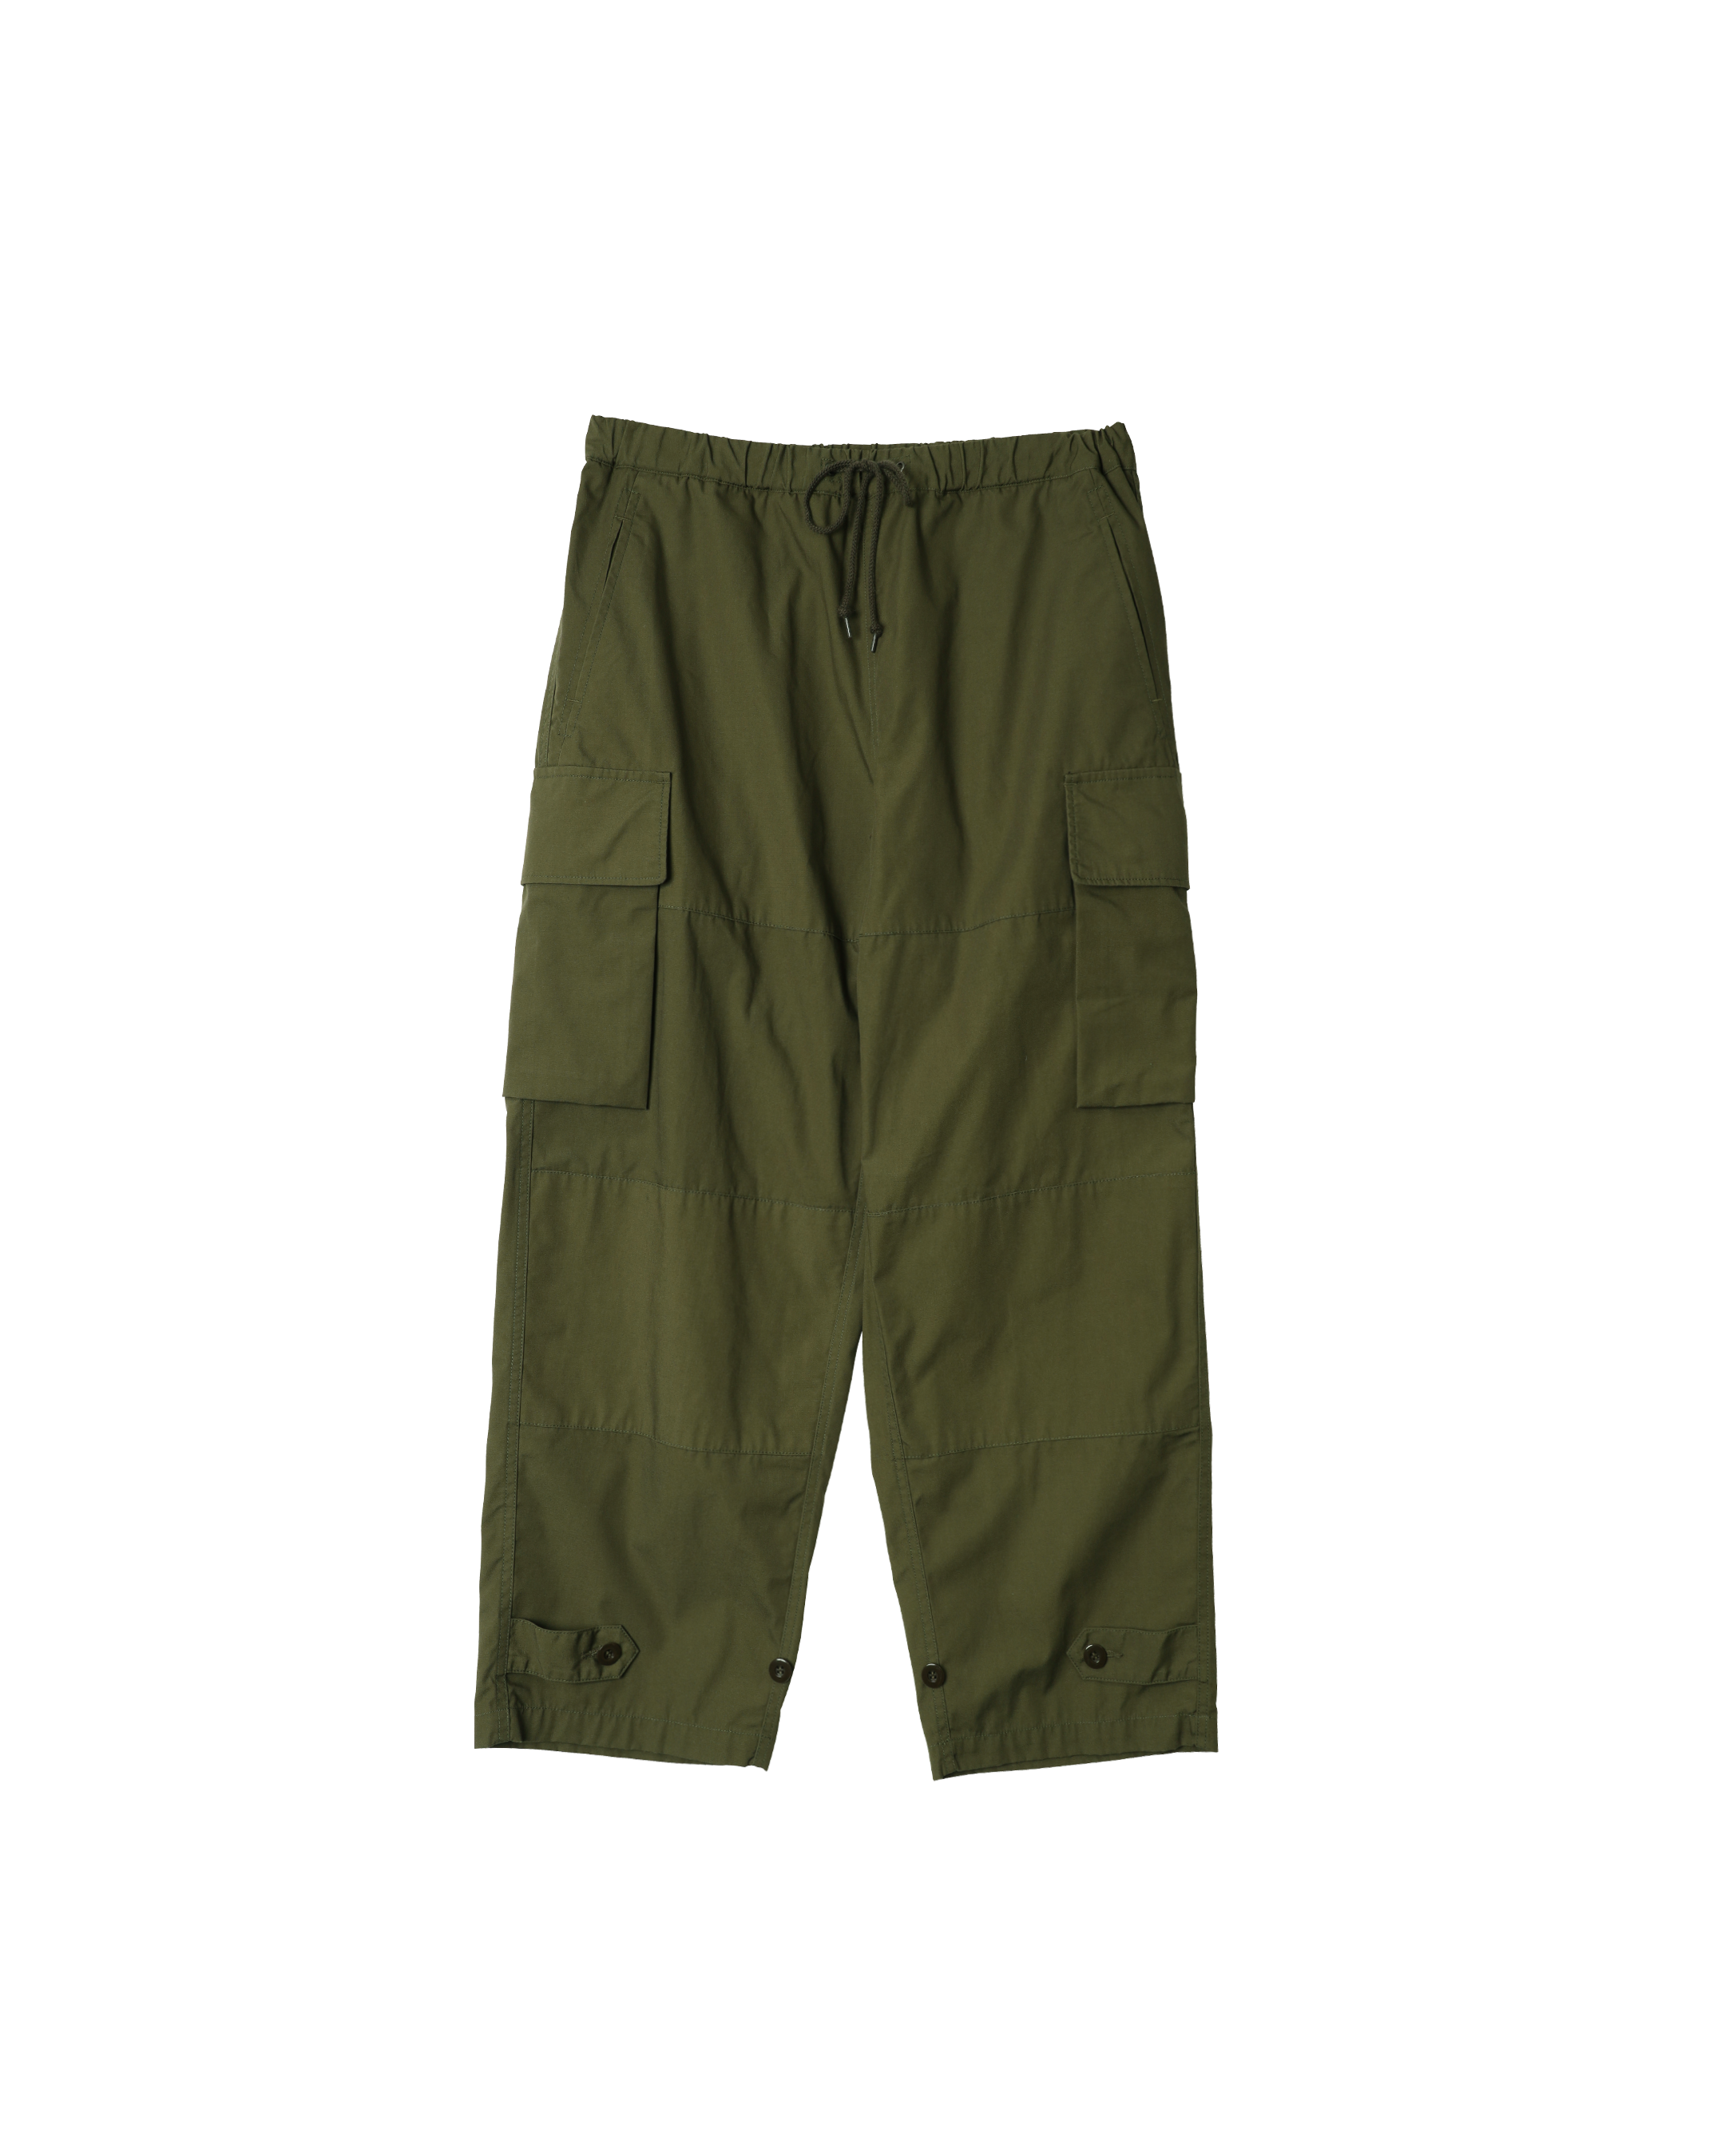 Cotton/Polyester Plain FRA Cargo Pants